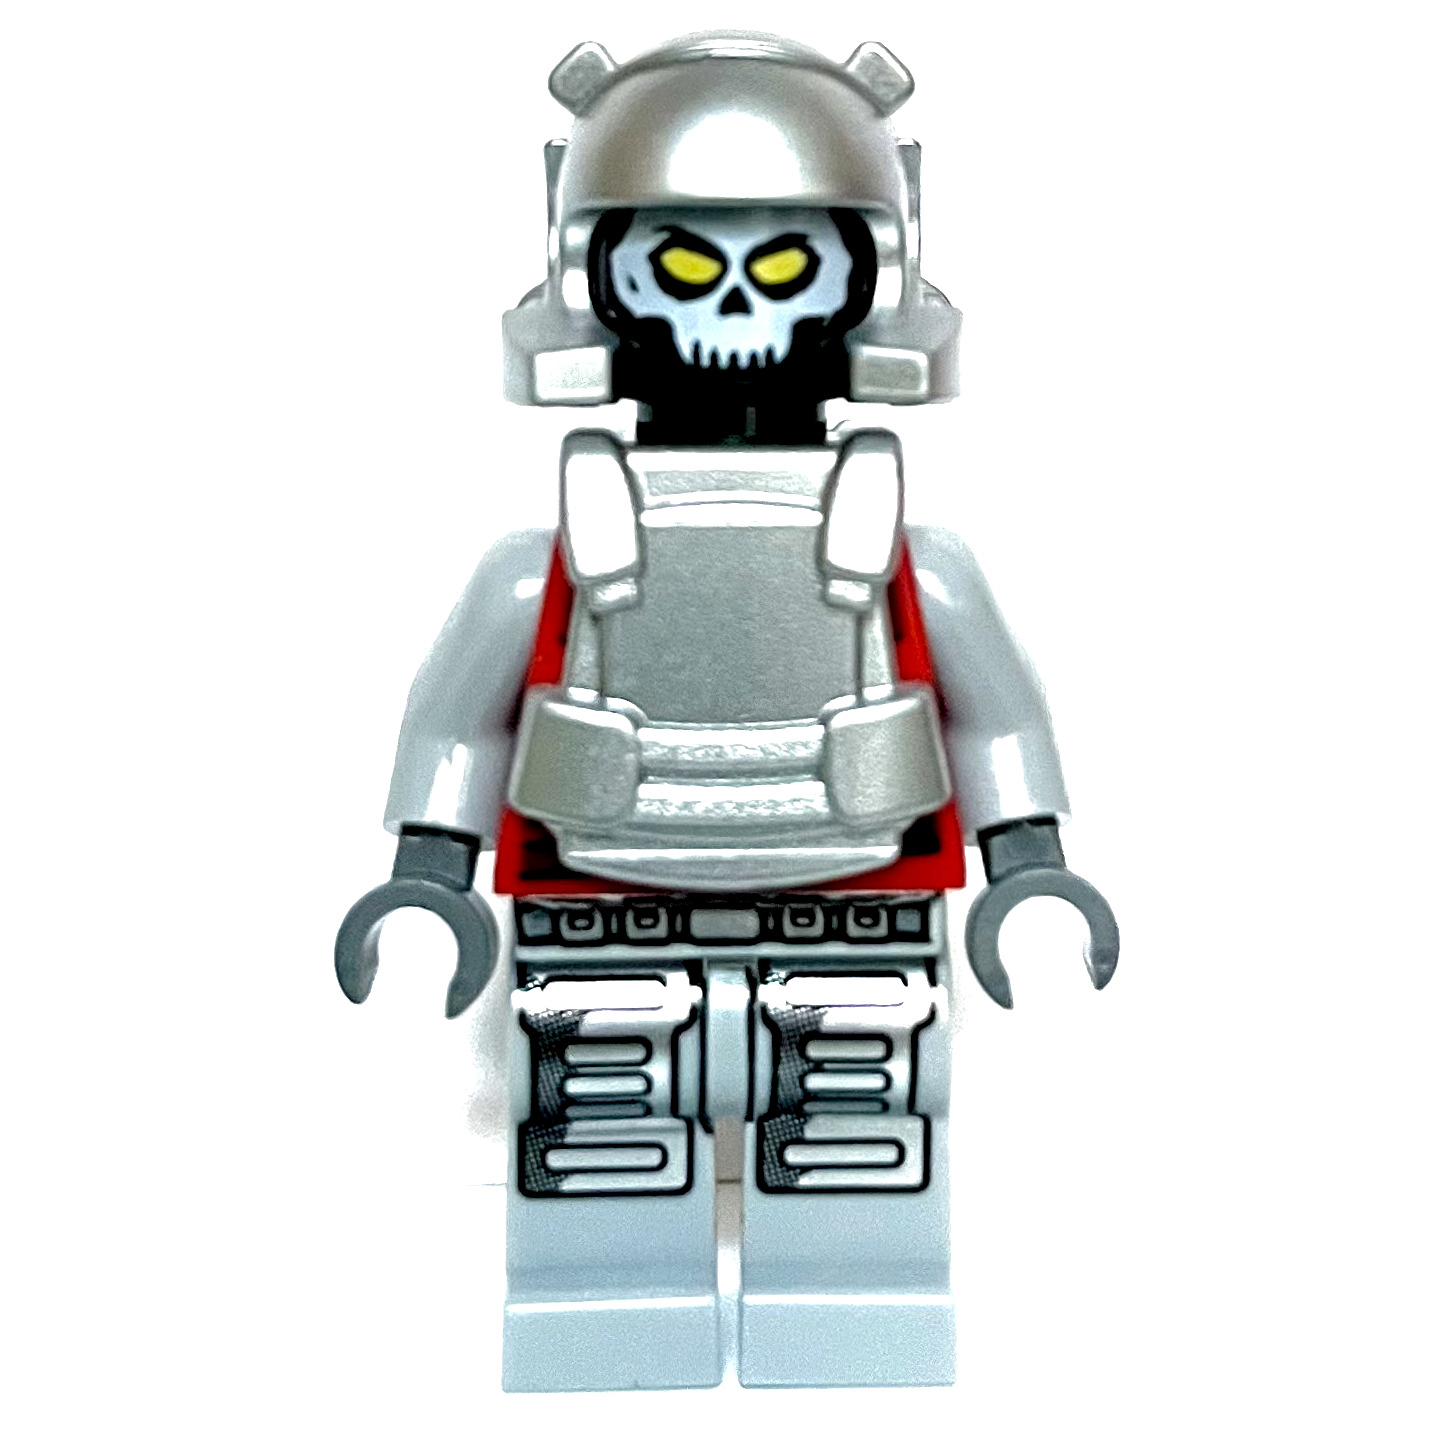 LEGO Star Wars - Clone Wars Darth Bane Minifigure (100% Genuine LEGO Bricks)